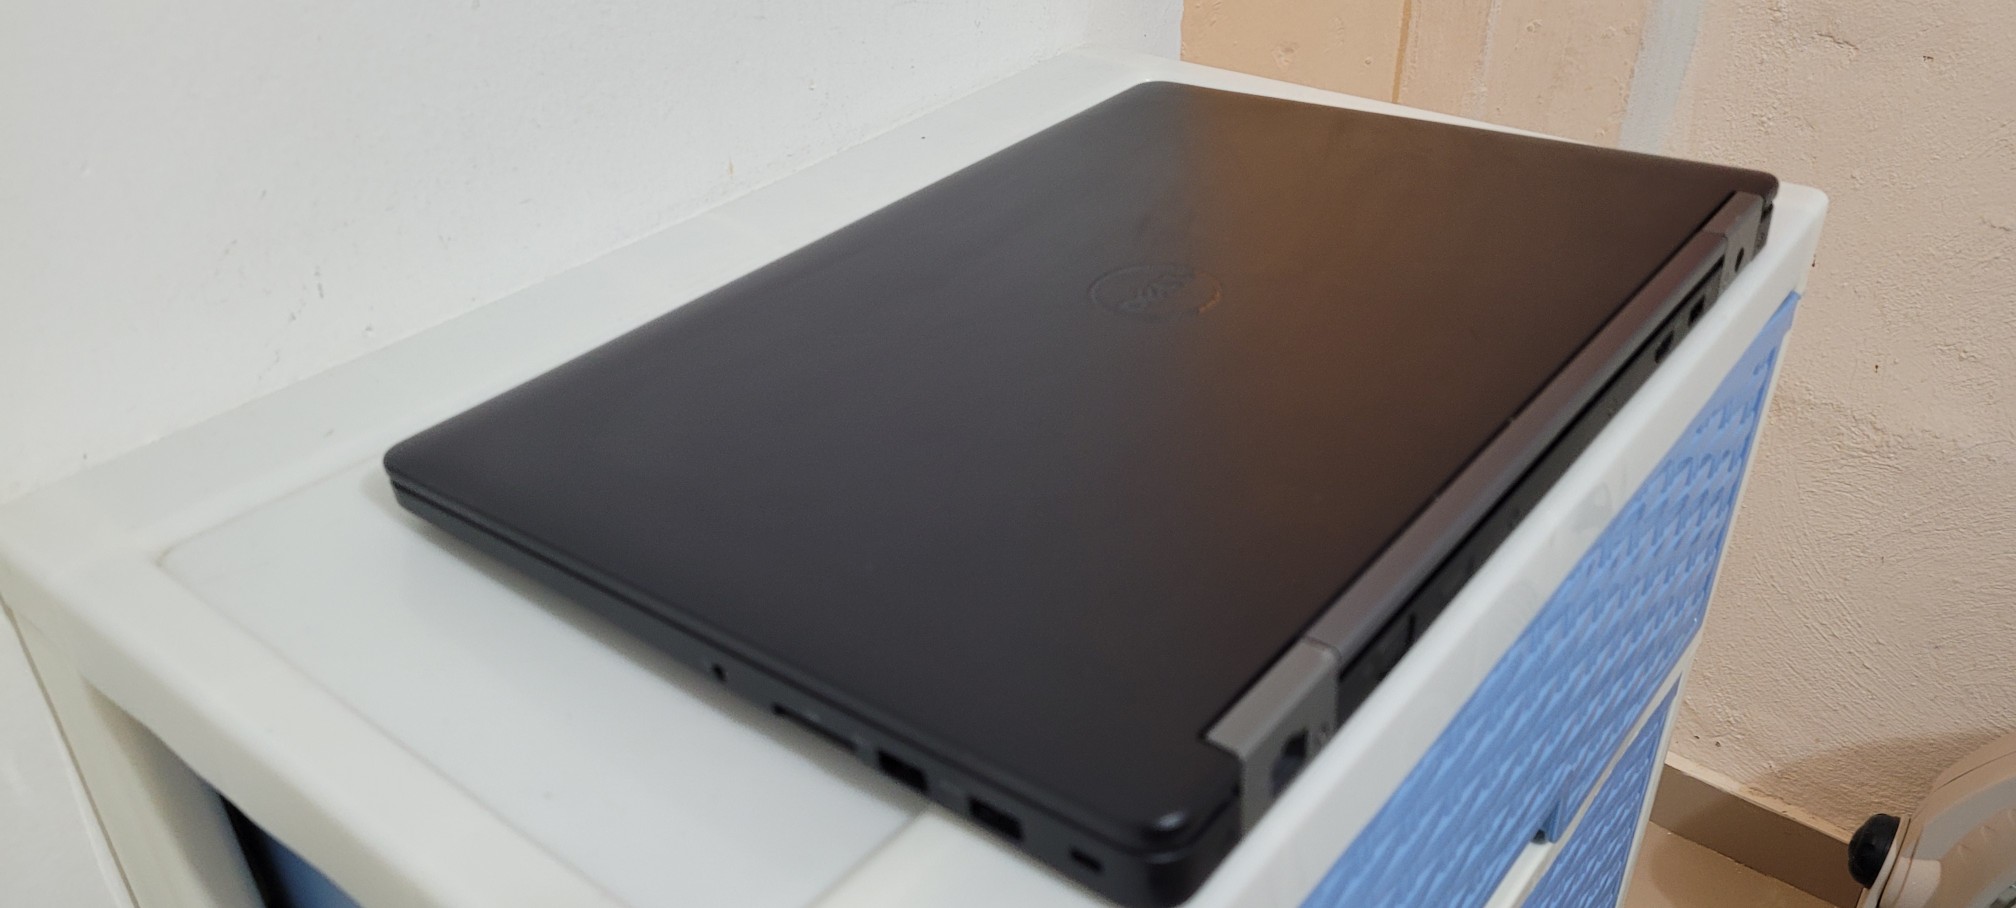 computadoras y laptops - Dell 5470 14 Pulg Core i7 6ta Ram 8gb ddr4 Disco 256gb SSD Solido 2